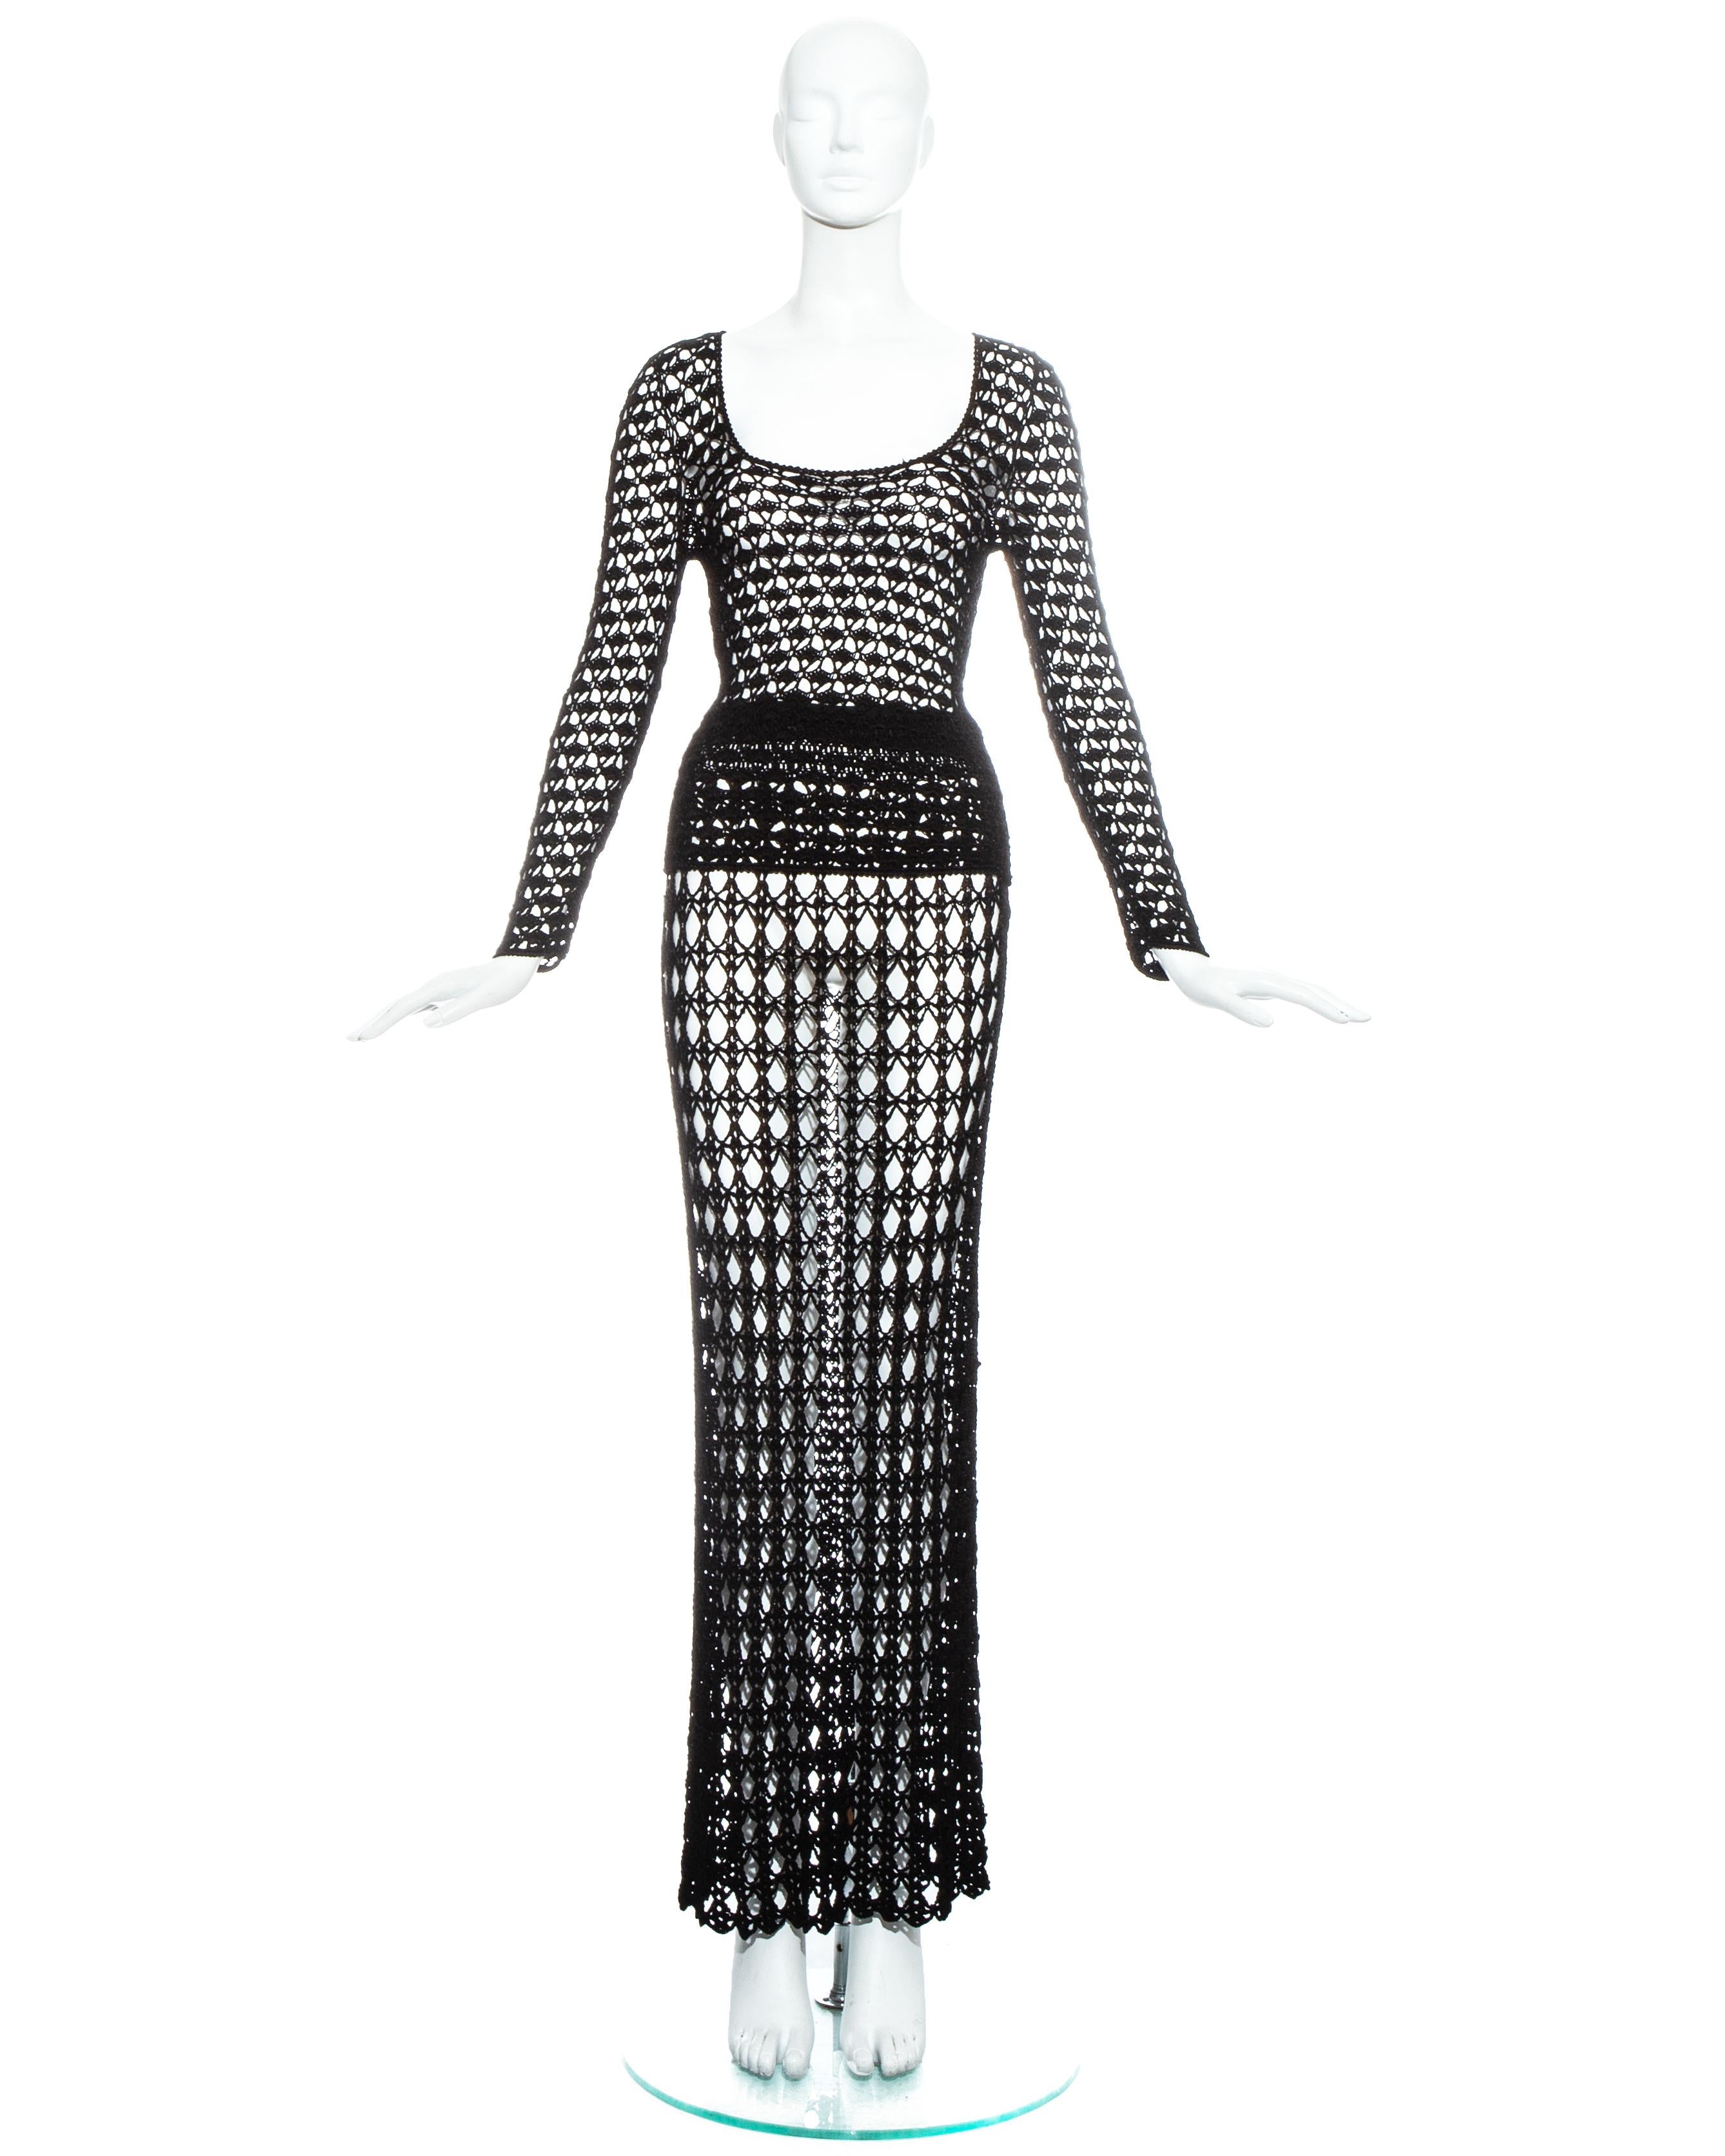 Dolce & Gabbana black crochet maxi skirt and sweater ensemble.

Spring-Summer 1997